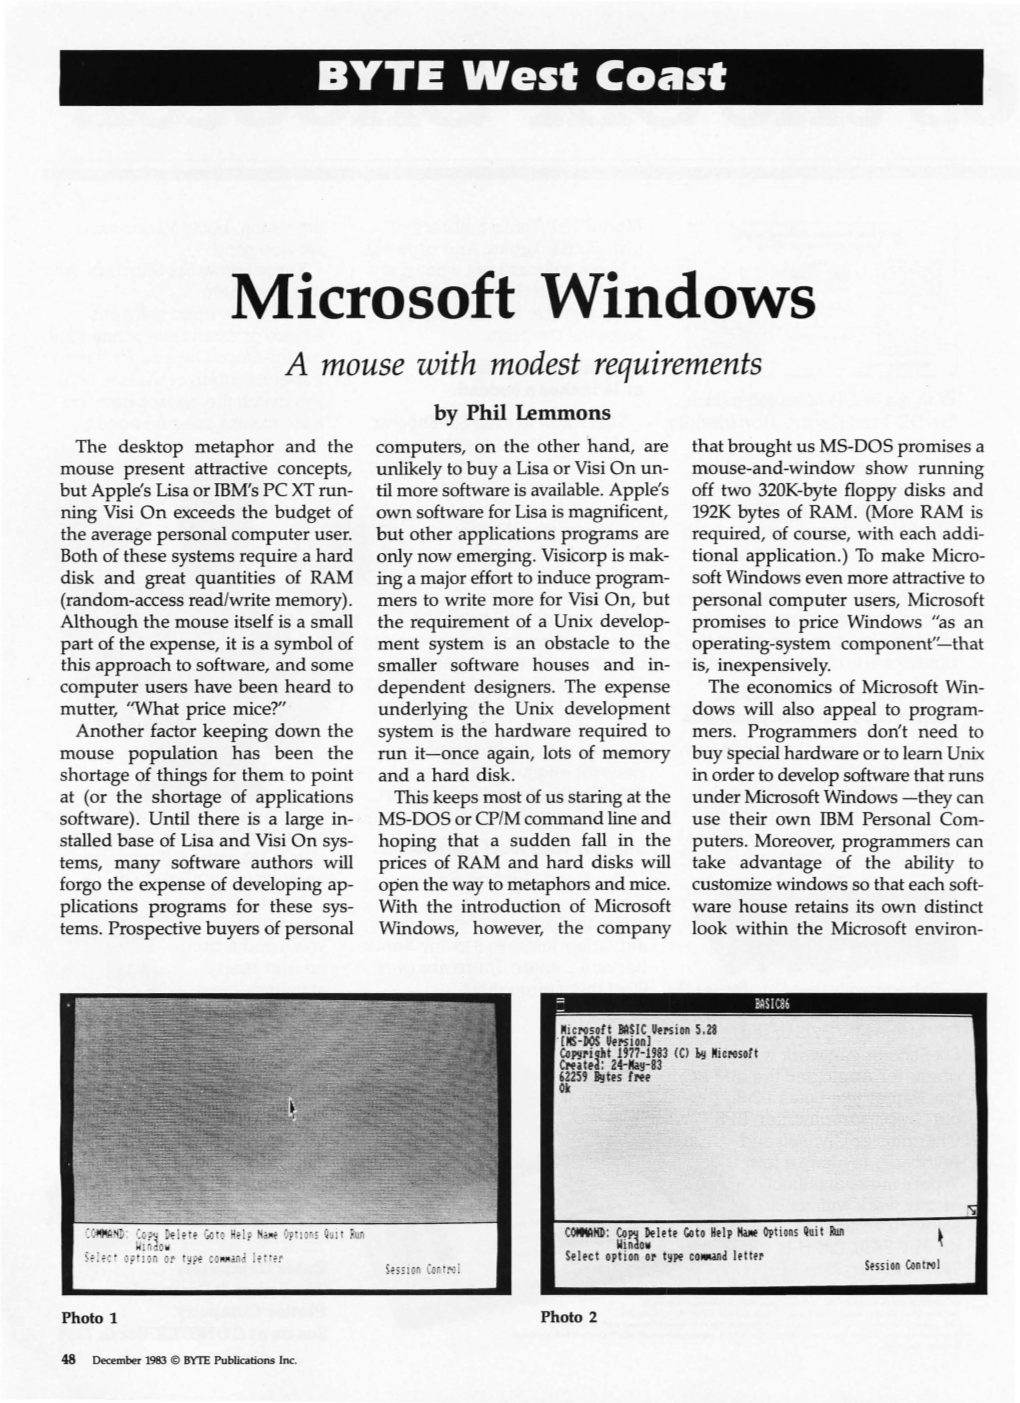 Microsoft Windows, December 1983, BYTE Magazine